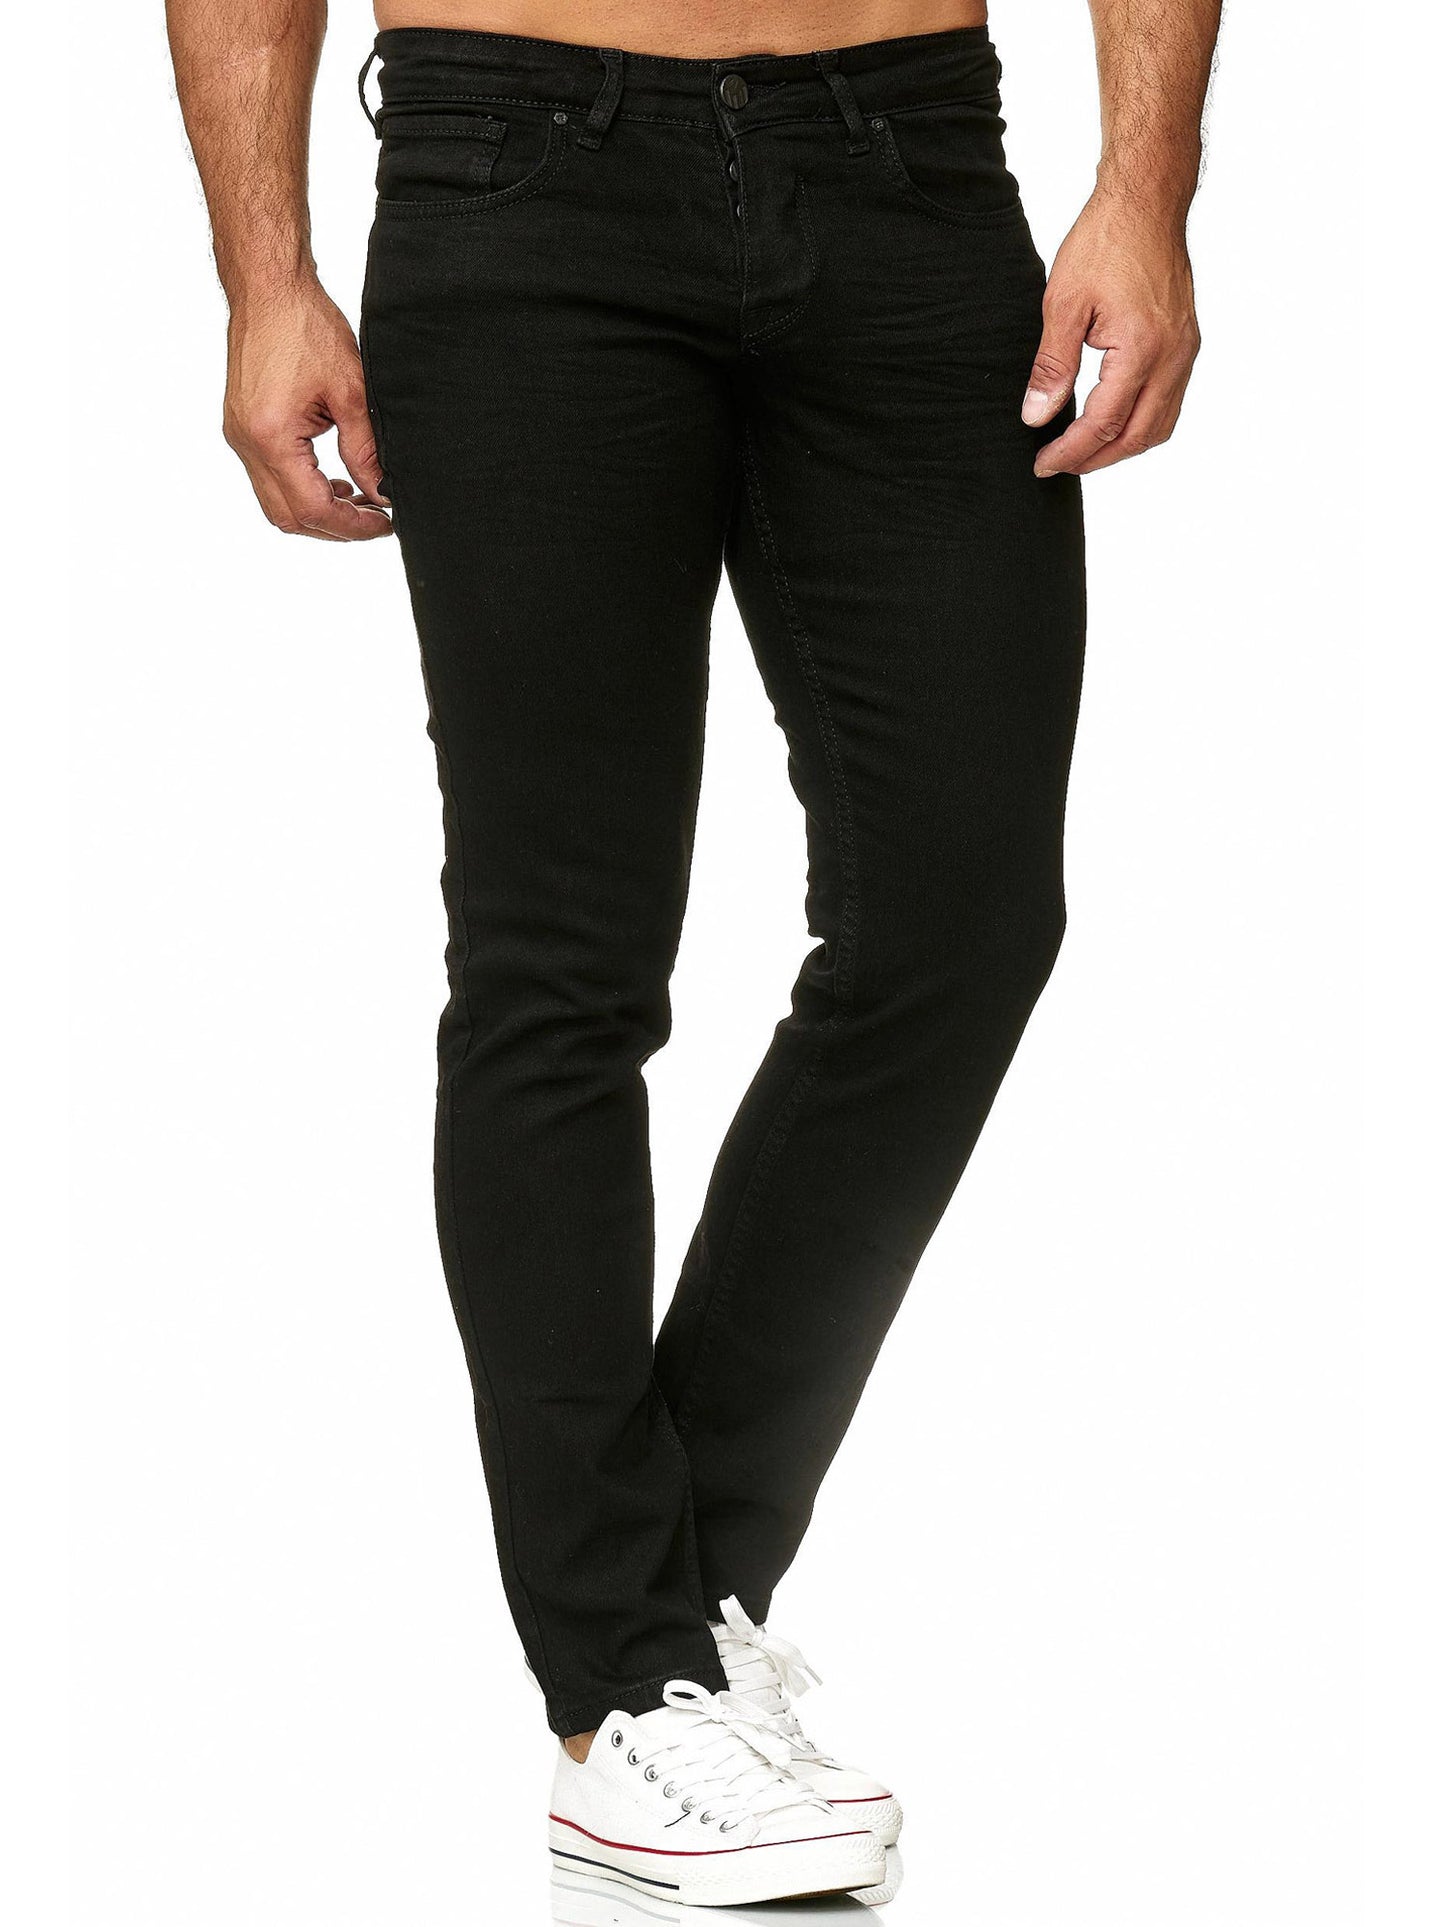 Tazzio Herren Jeans Slim Fit 16533 Black